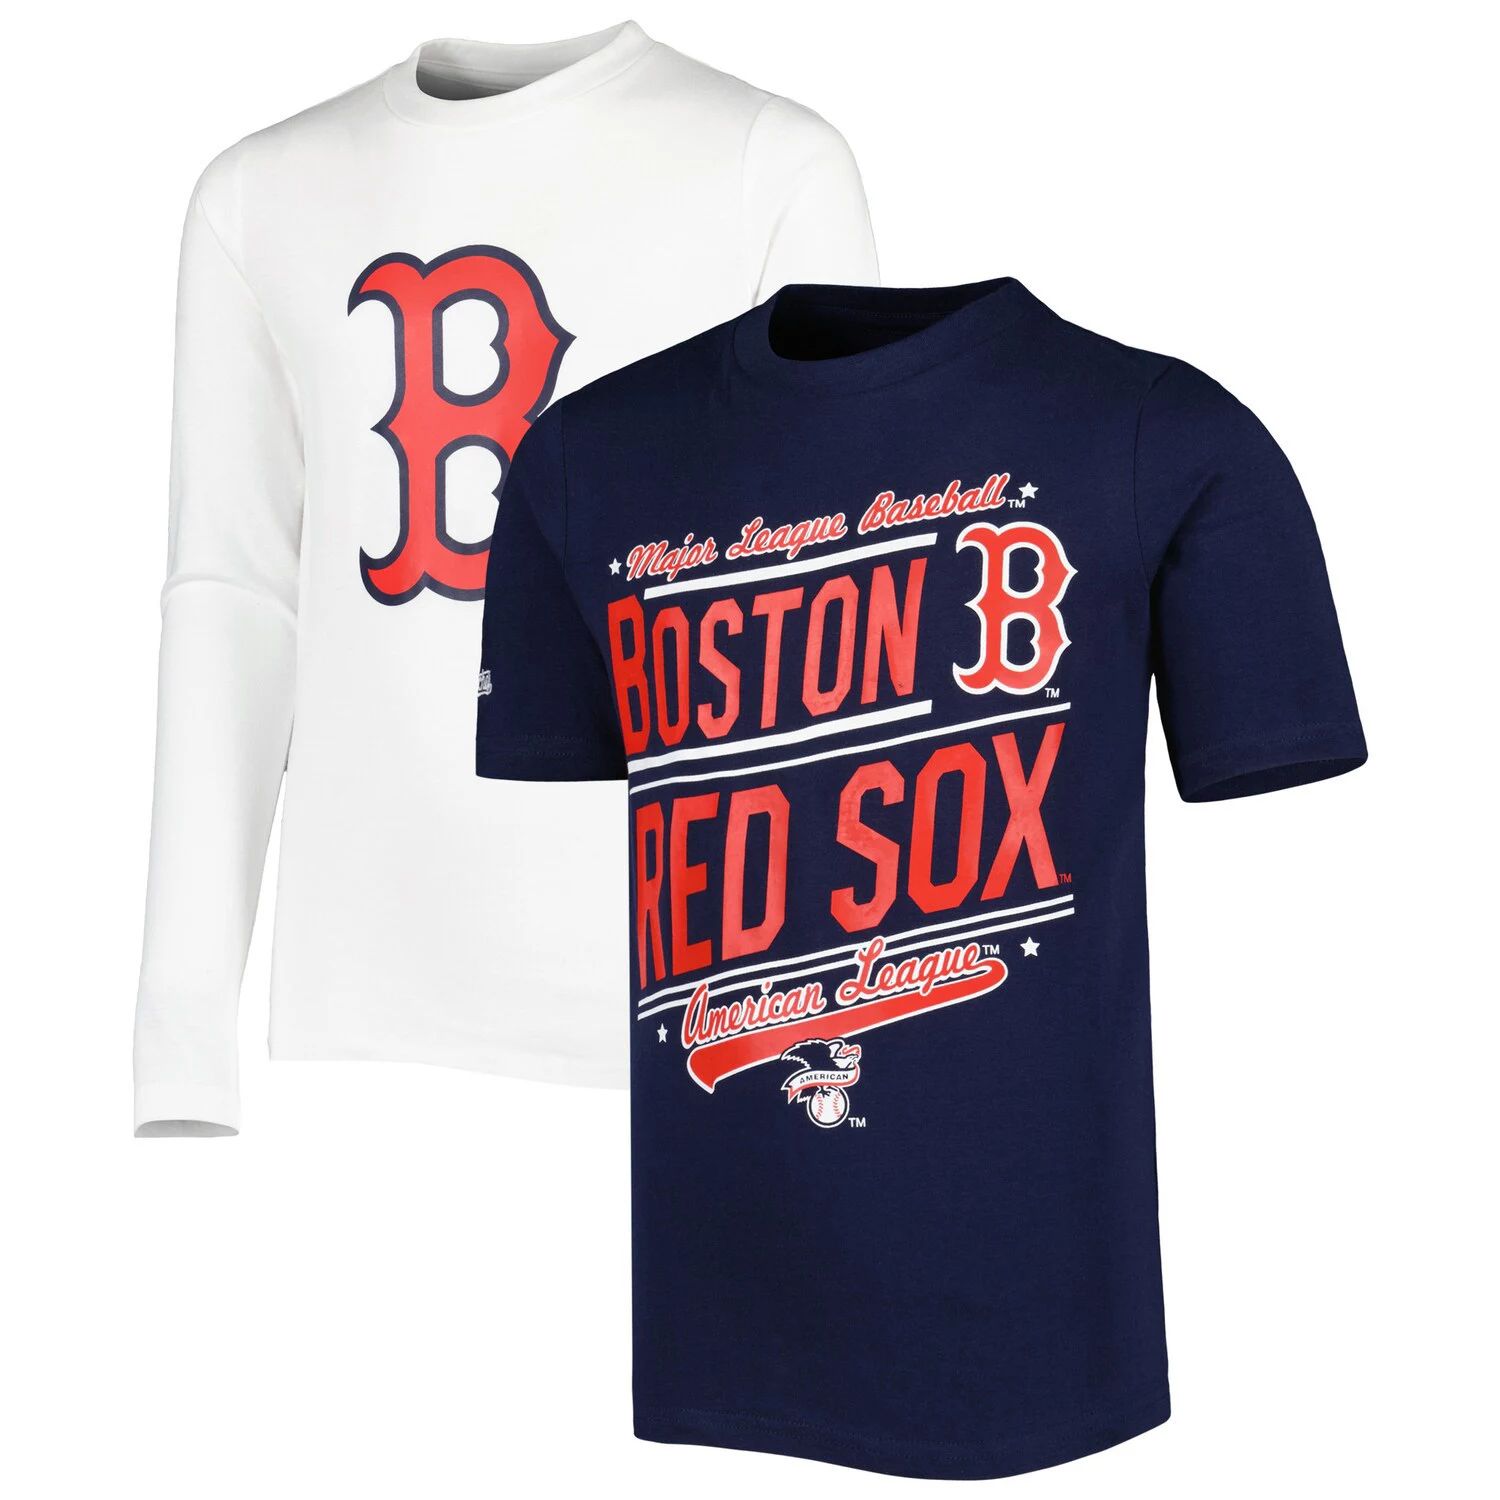 Темно-синий/белый комплект футболок Youth Stitches Boston Red Sox Stitches цена и фото